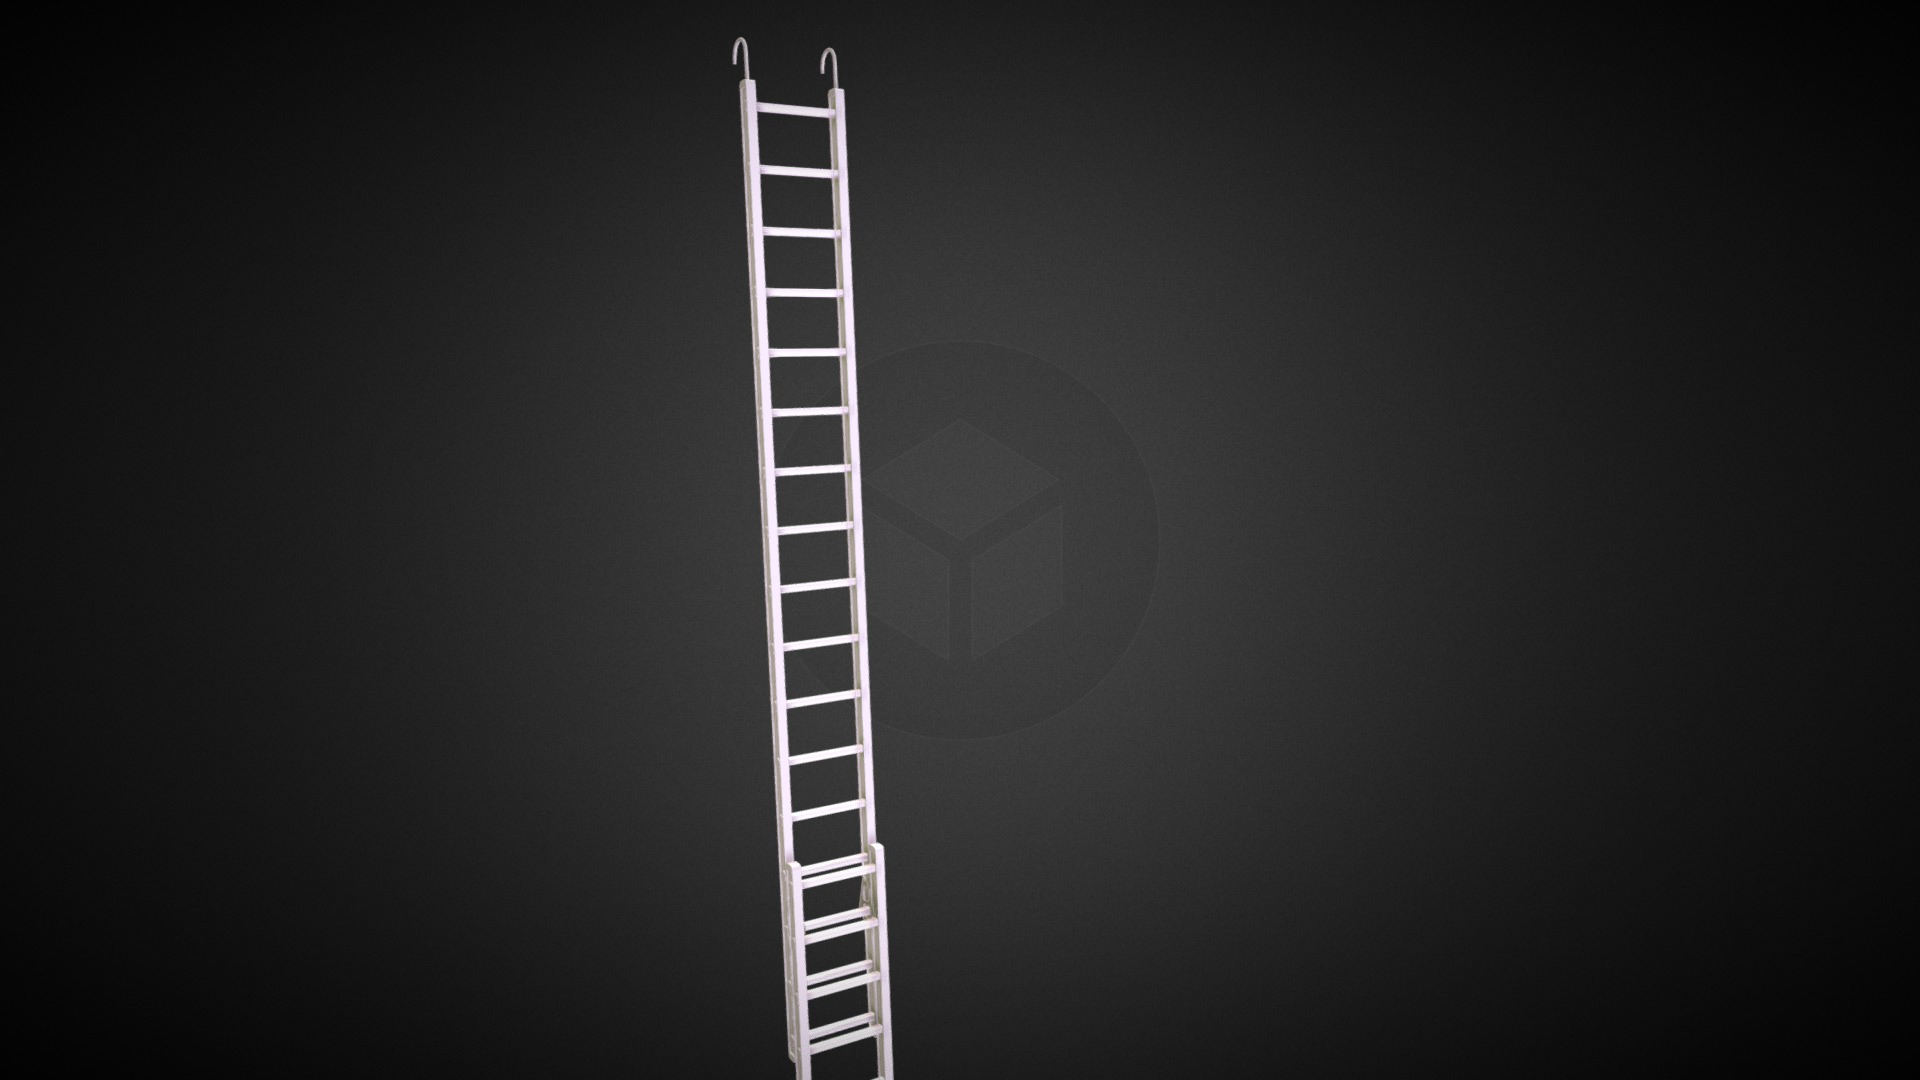 Portable Ladder